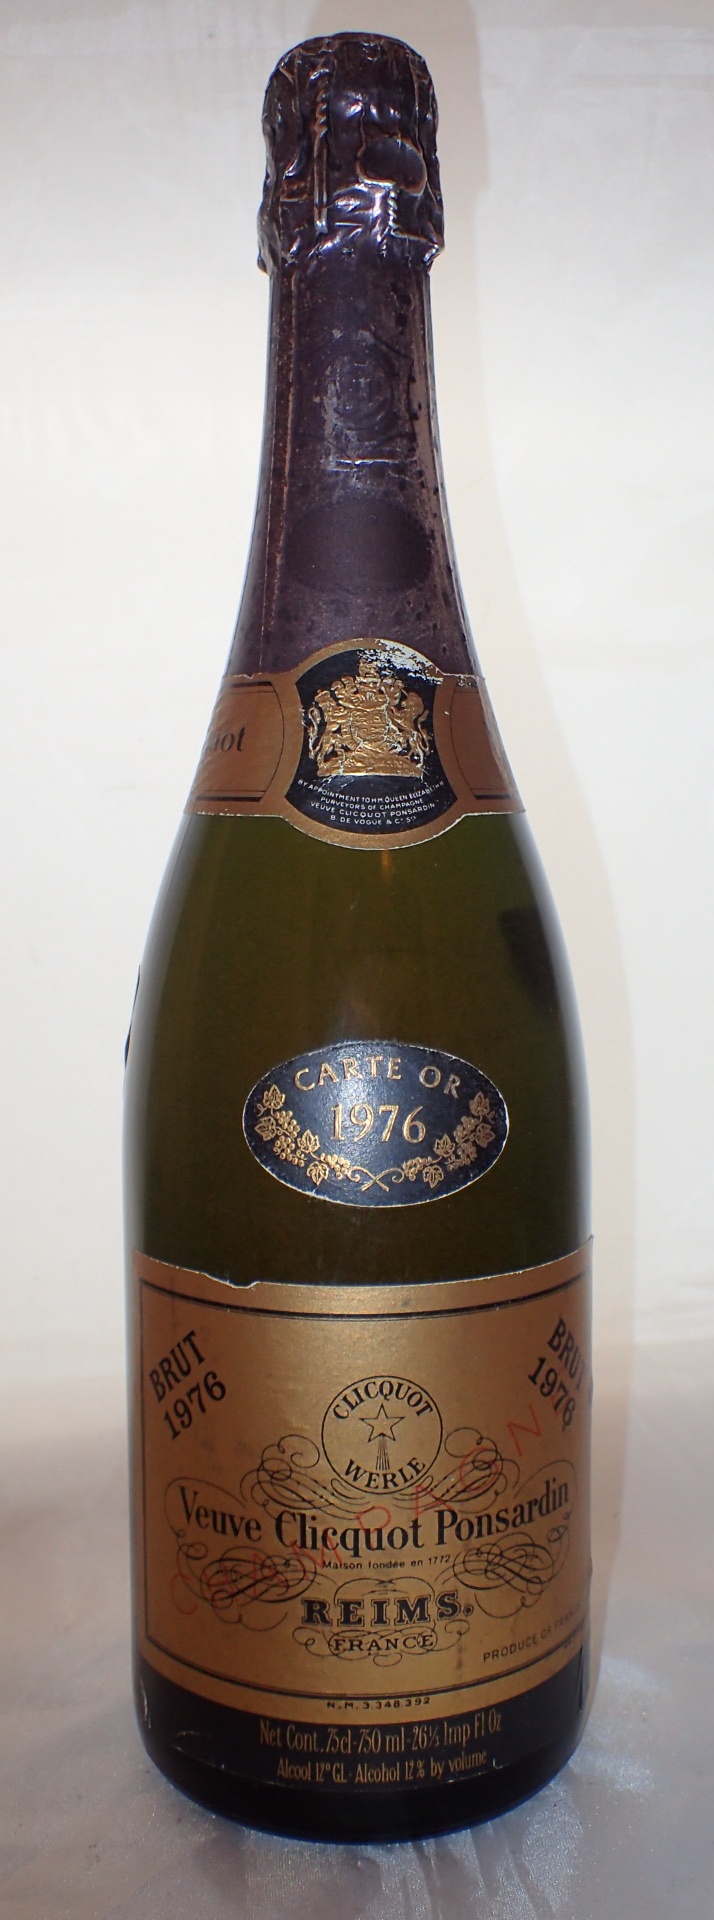 Bottle of Veuve Clicquot 1976 Ponsardin Champagne